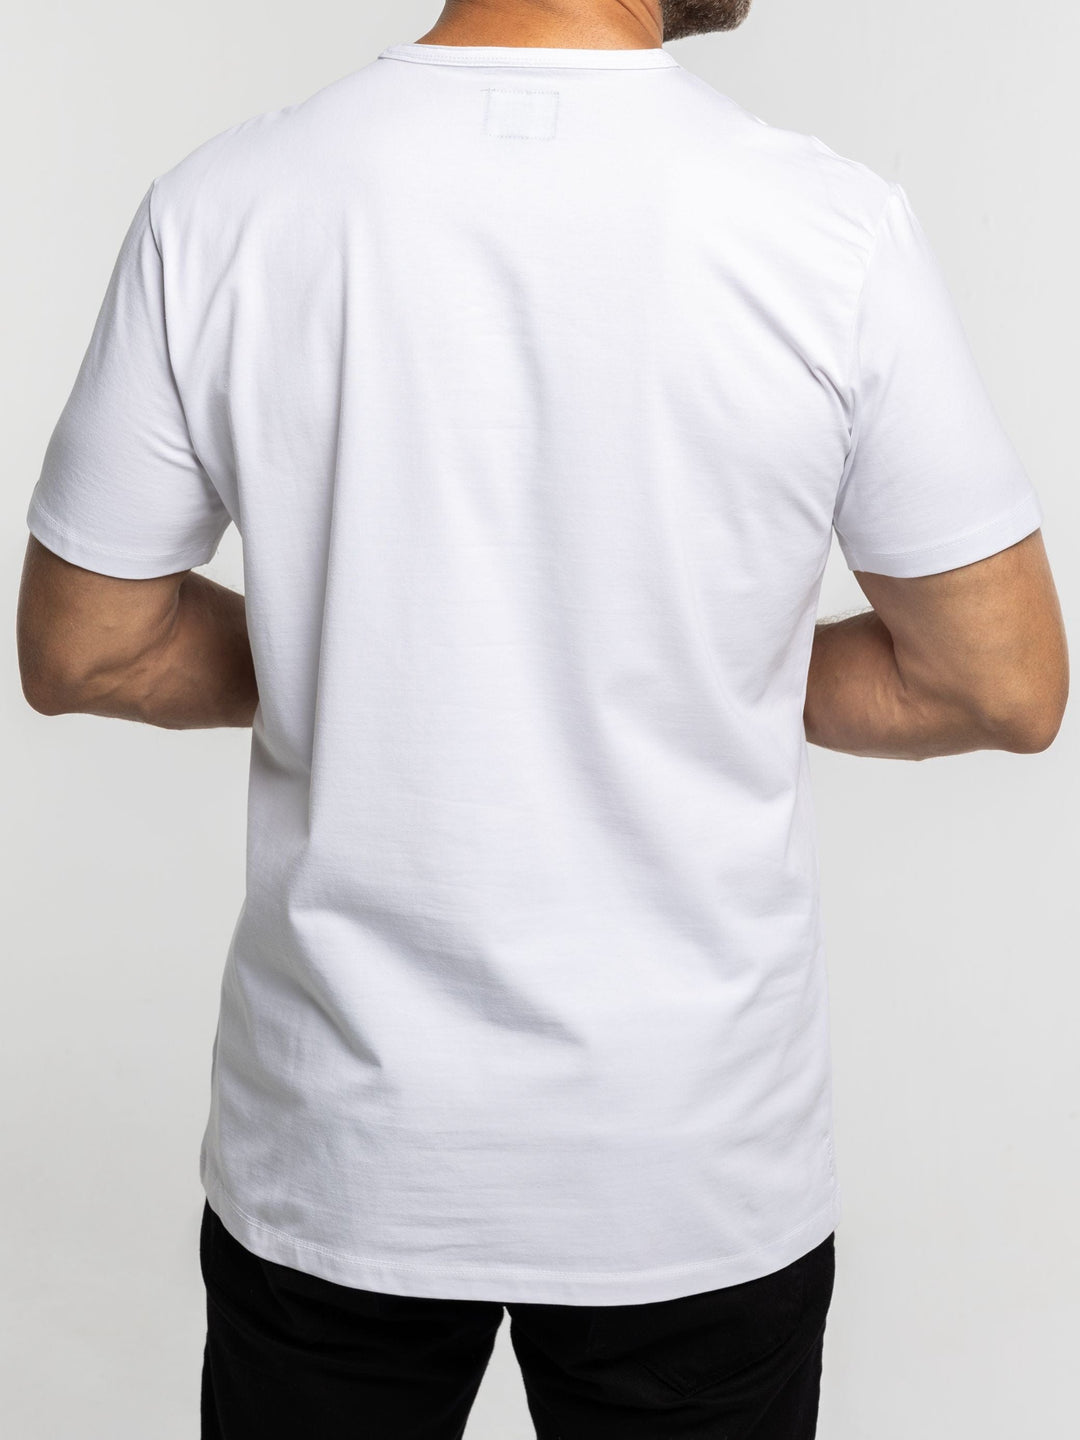 Zhivago x Nuuk Men T-shirt White Straight Hem T-Shirt: SLS Comfort